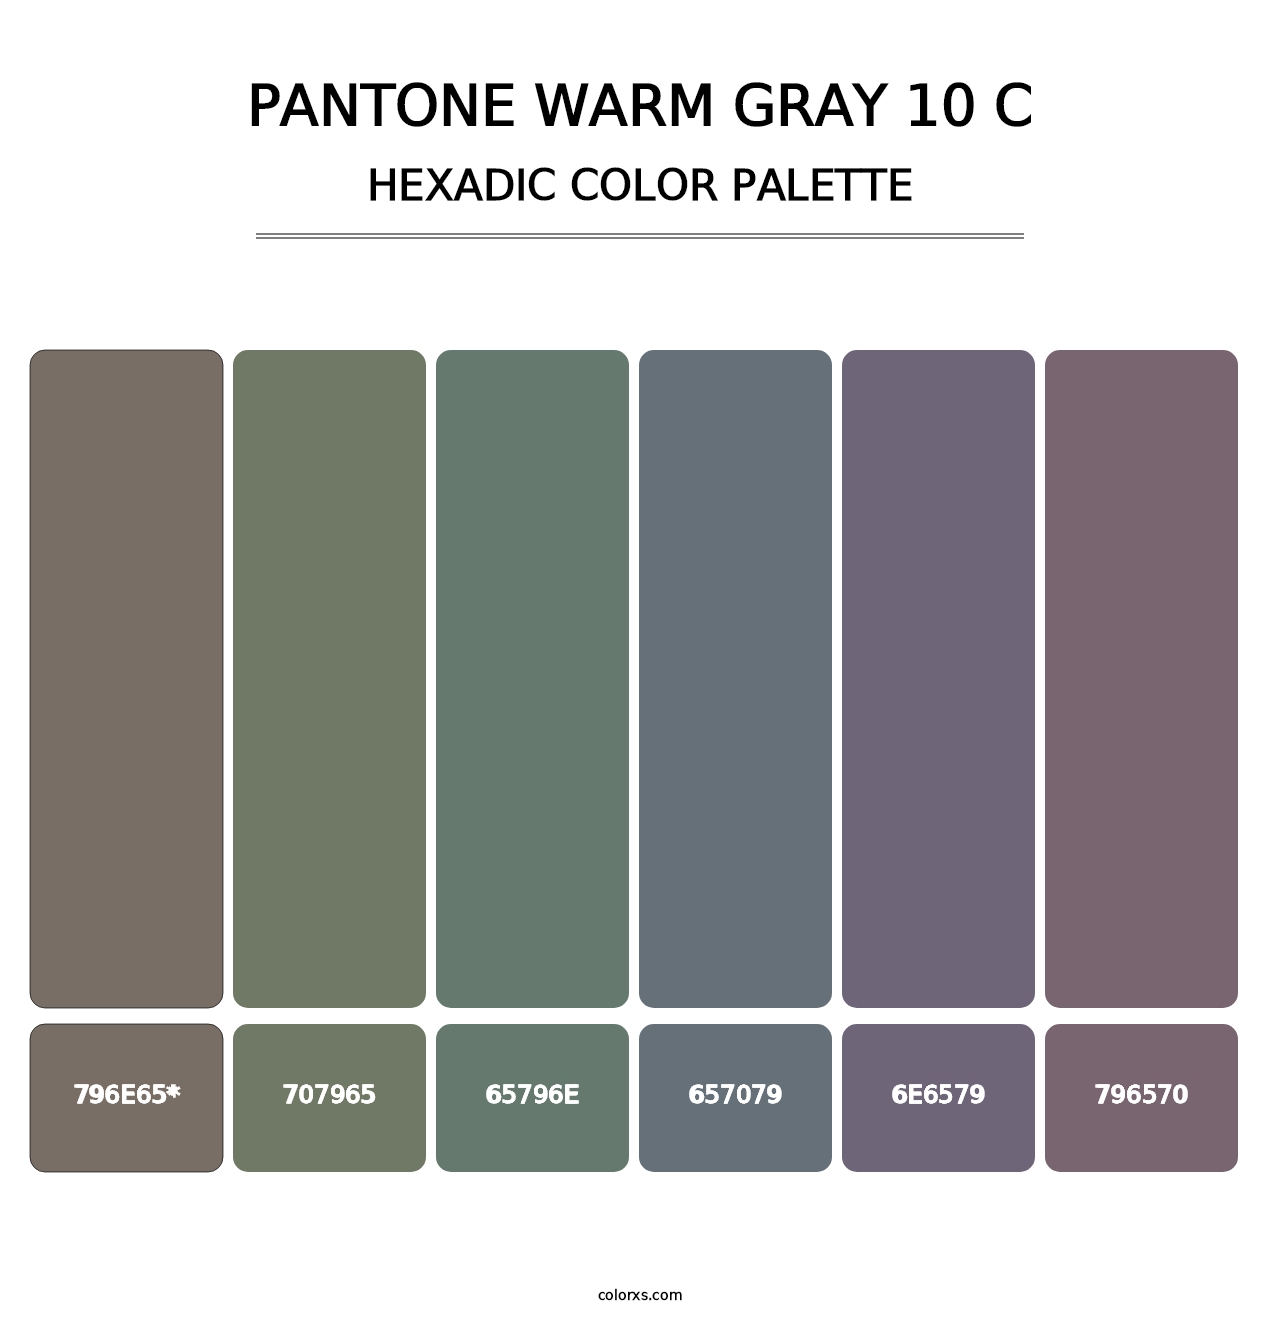 PANTONE Warm Gray 10 C - Hexadic Color Palette